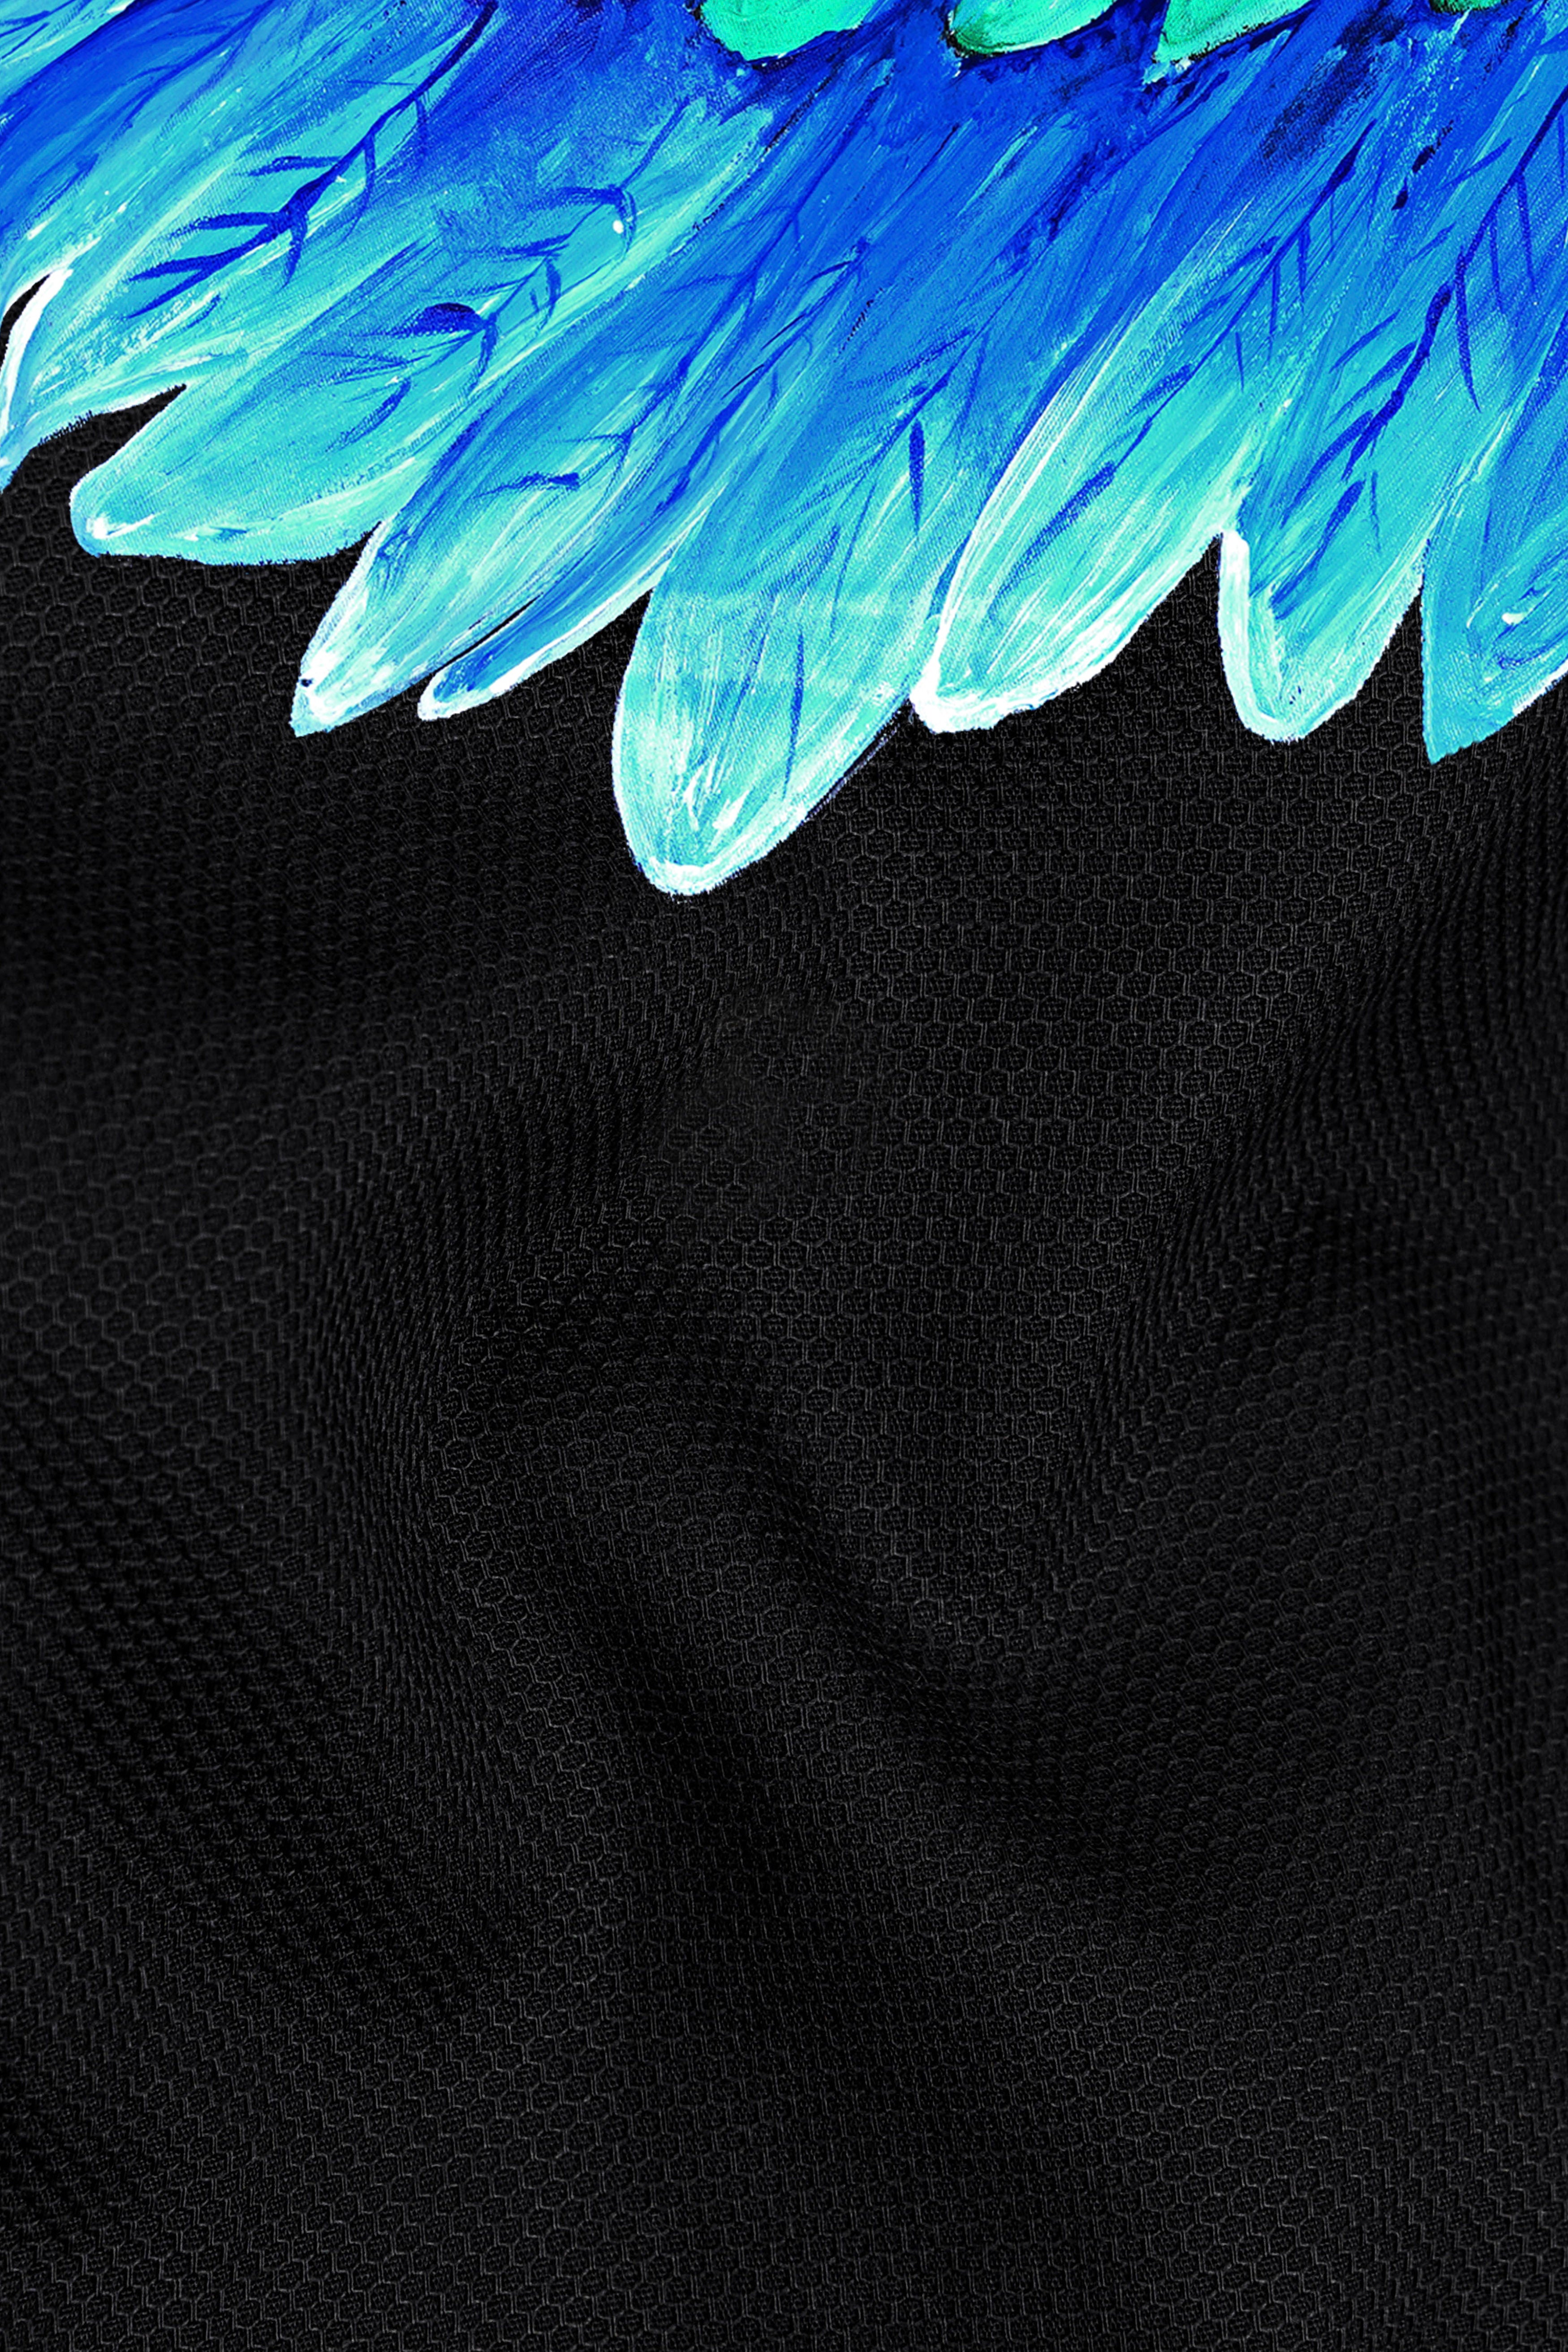 Jade Black Multicolour Wings Hand Painted Dobby Textured Premium Giza Cotton Designer Shirt